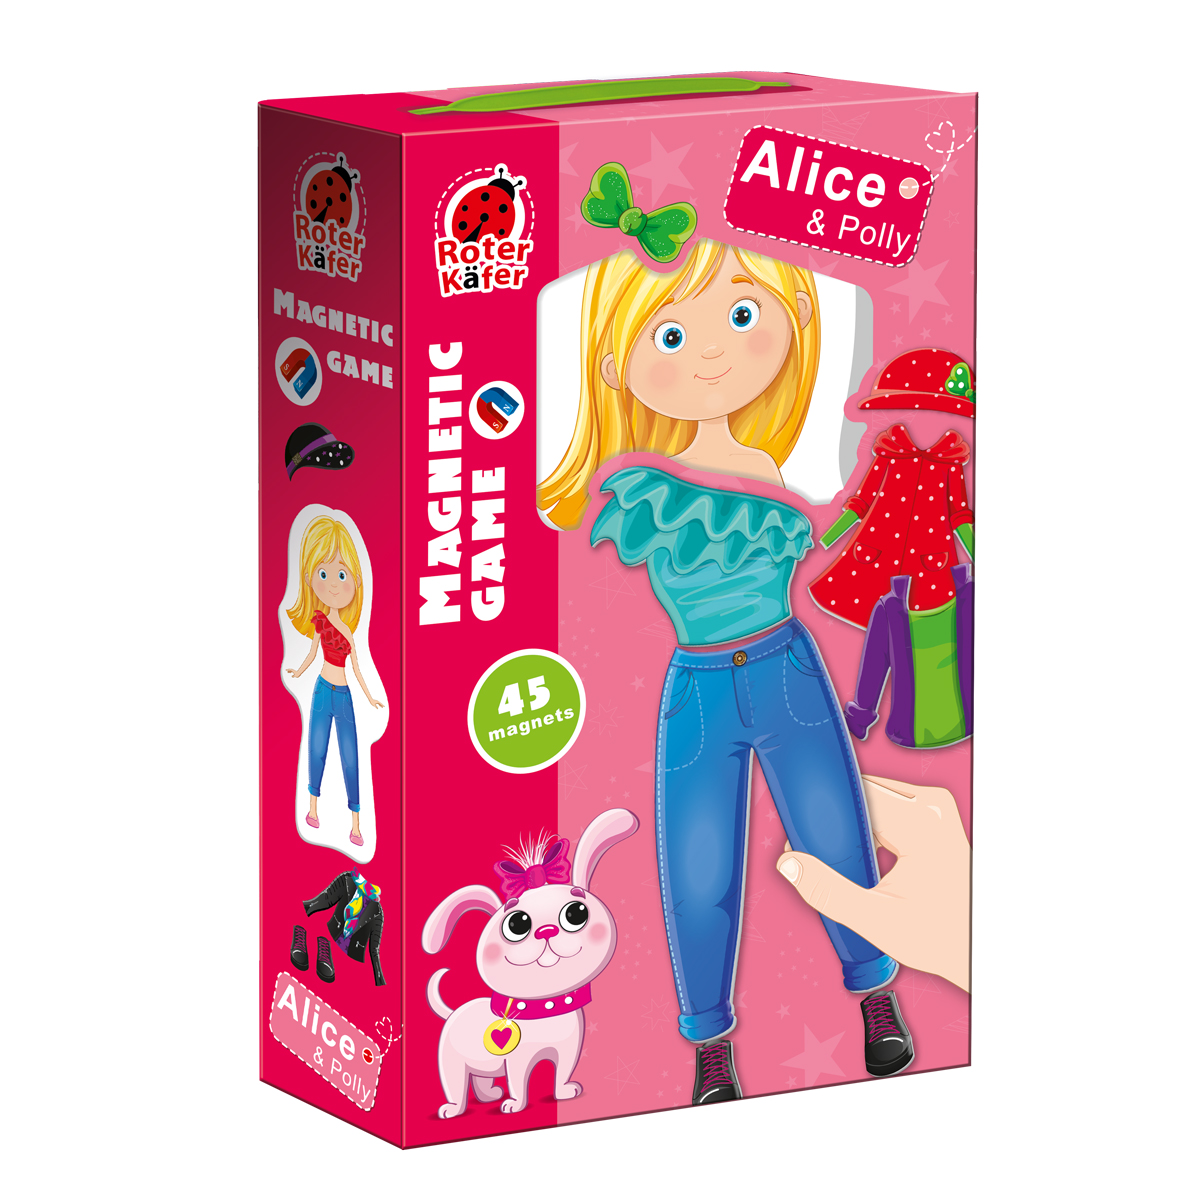 Магнитная игра Roter Kafer кукла-одевашка Alice and Polly - фото 6